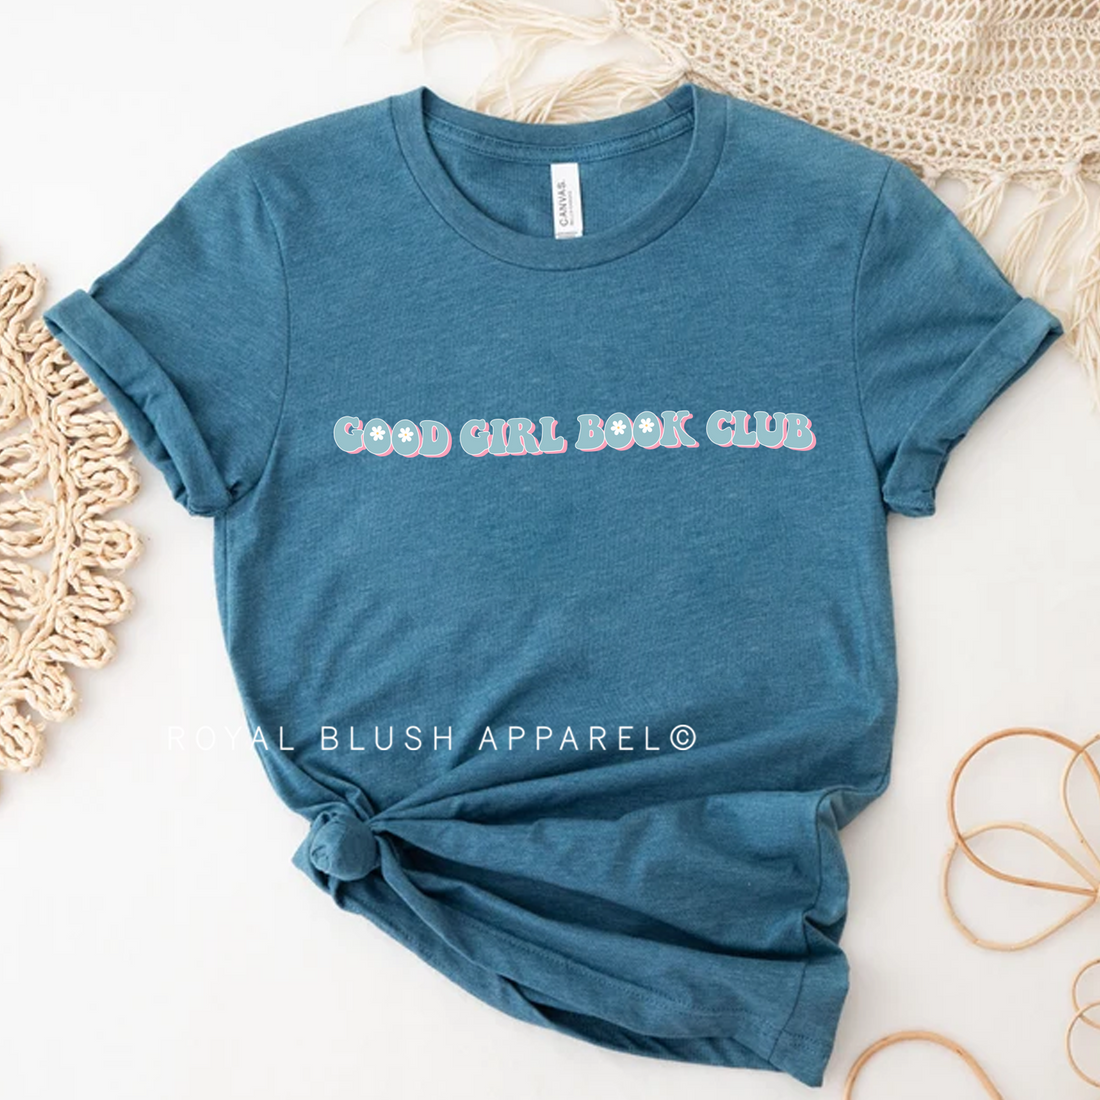 Good Girl Book Club T-shirt unisexe décontracté